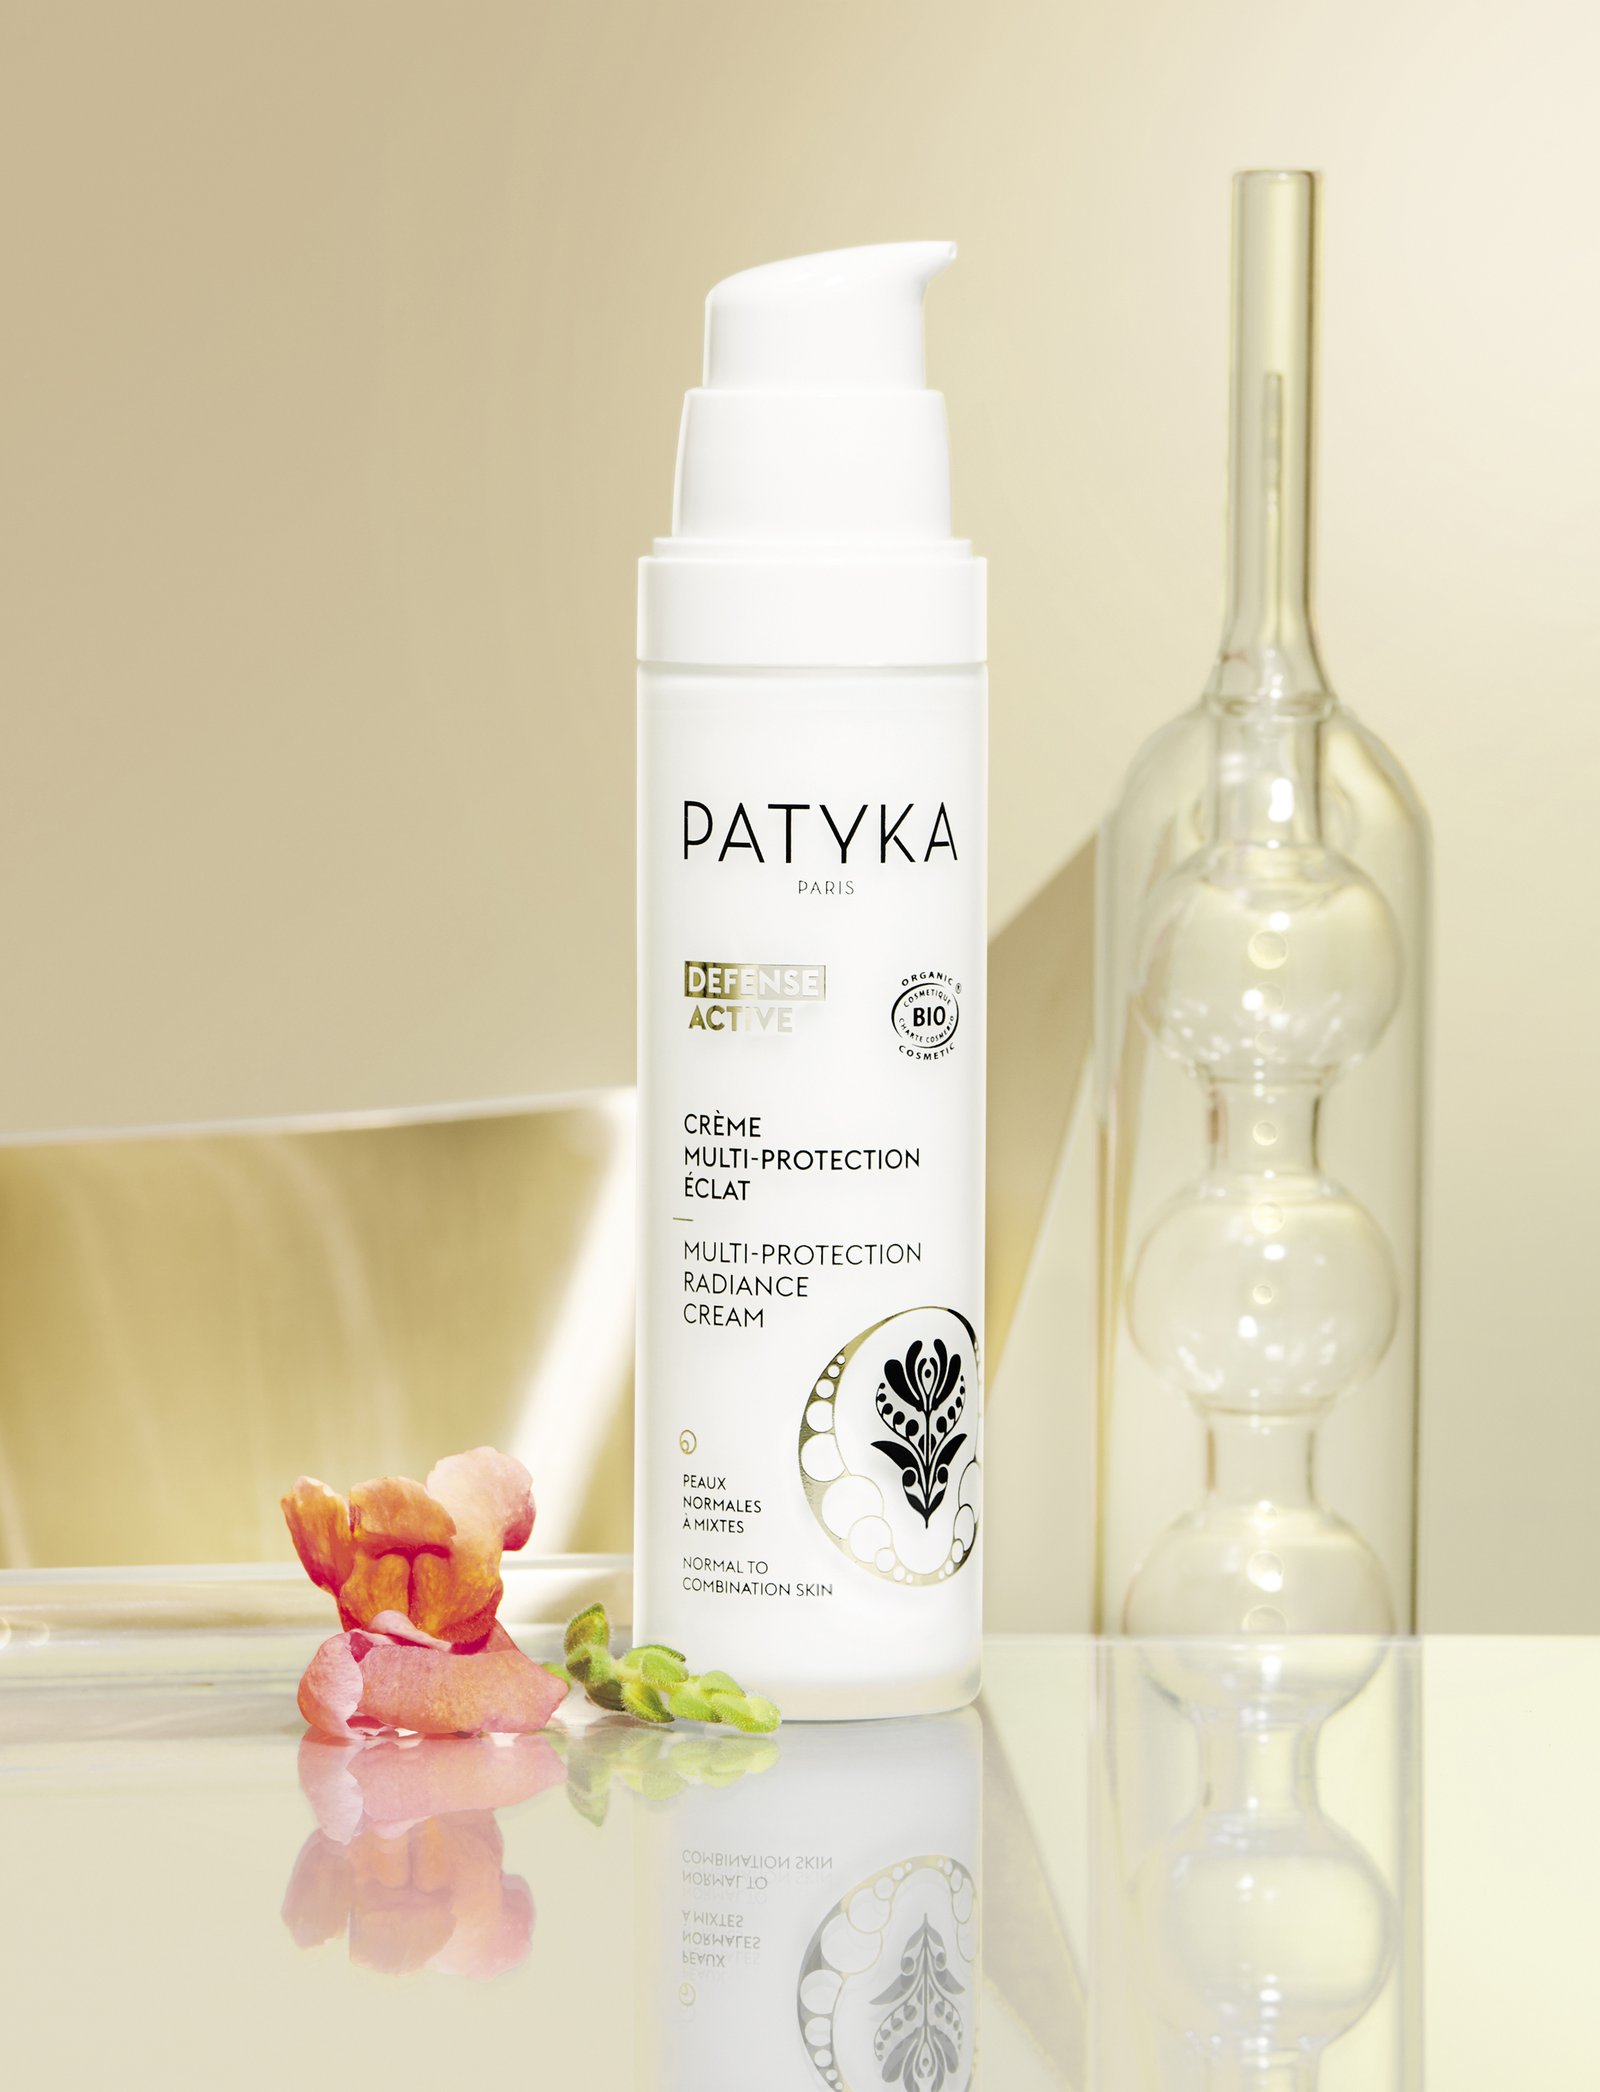 Patyka Multi-Protection Radiance Cream / Dry Skin 50ml